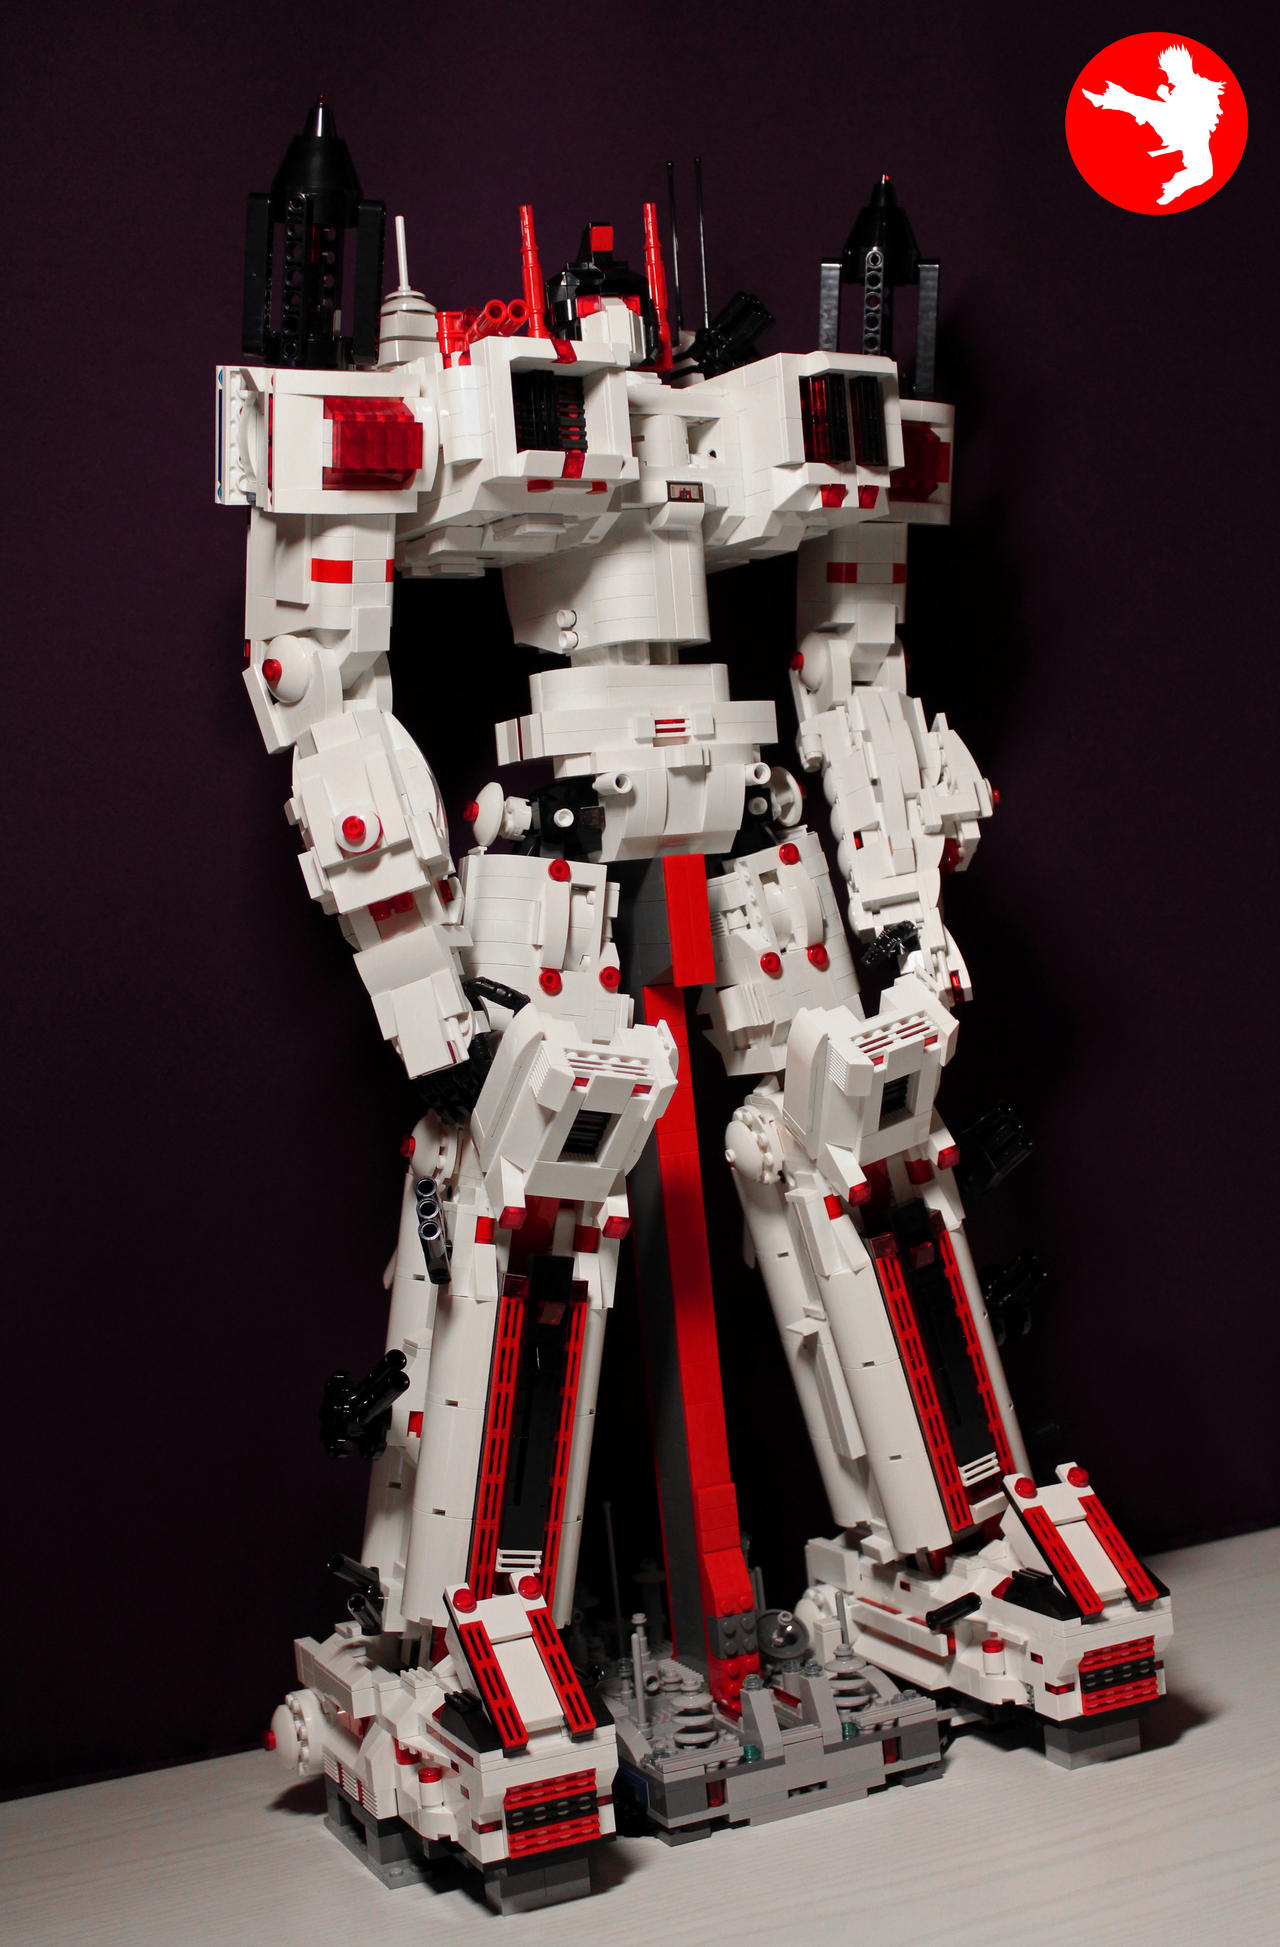 LEGO Transformers Masterpiece Metroplex 2015 - 004 by Dejin-Art on DeviantArt